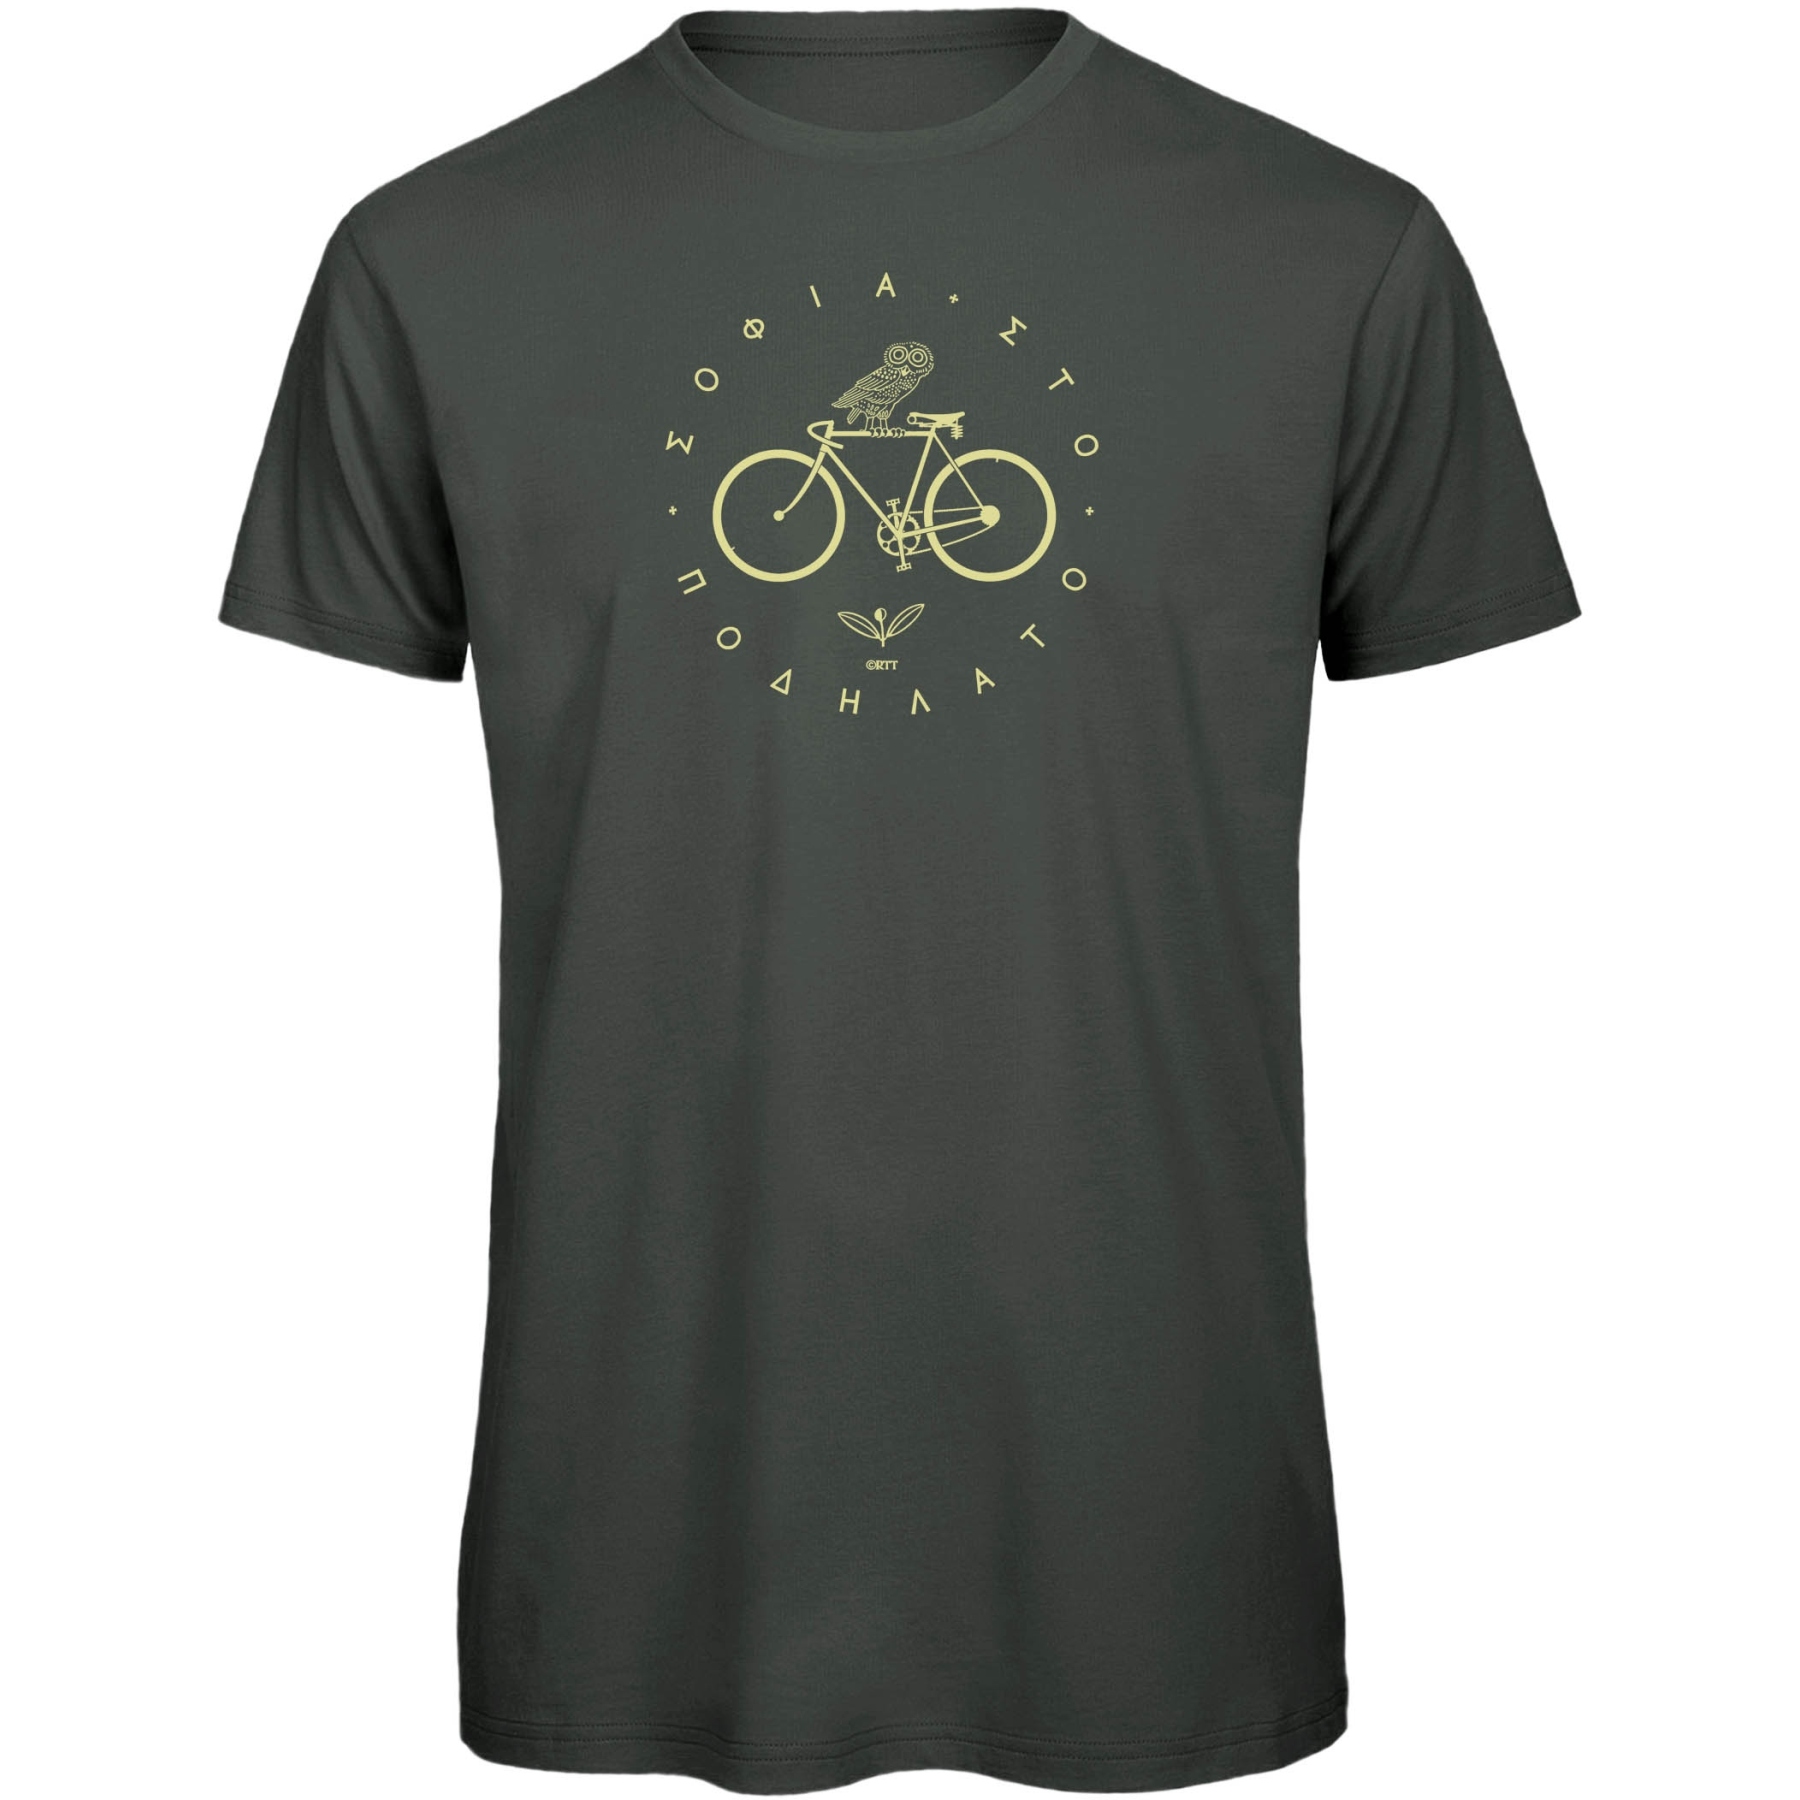 Productfoto van RTTshirts Fiets T-Shirt - Minerva - donker grijs